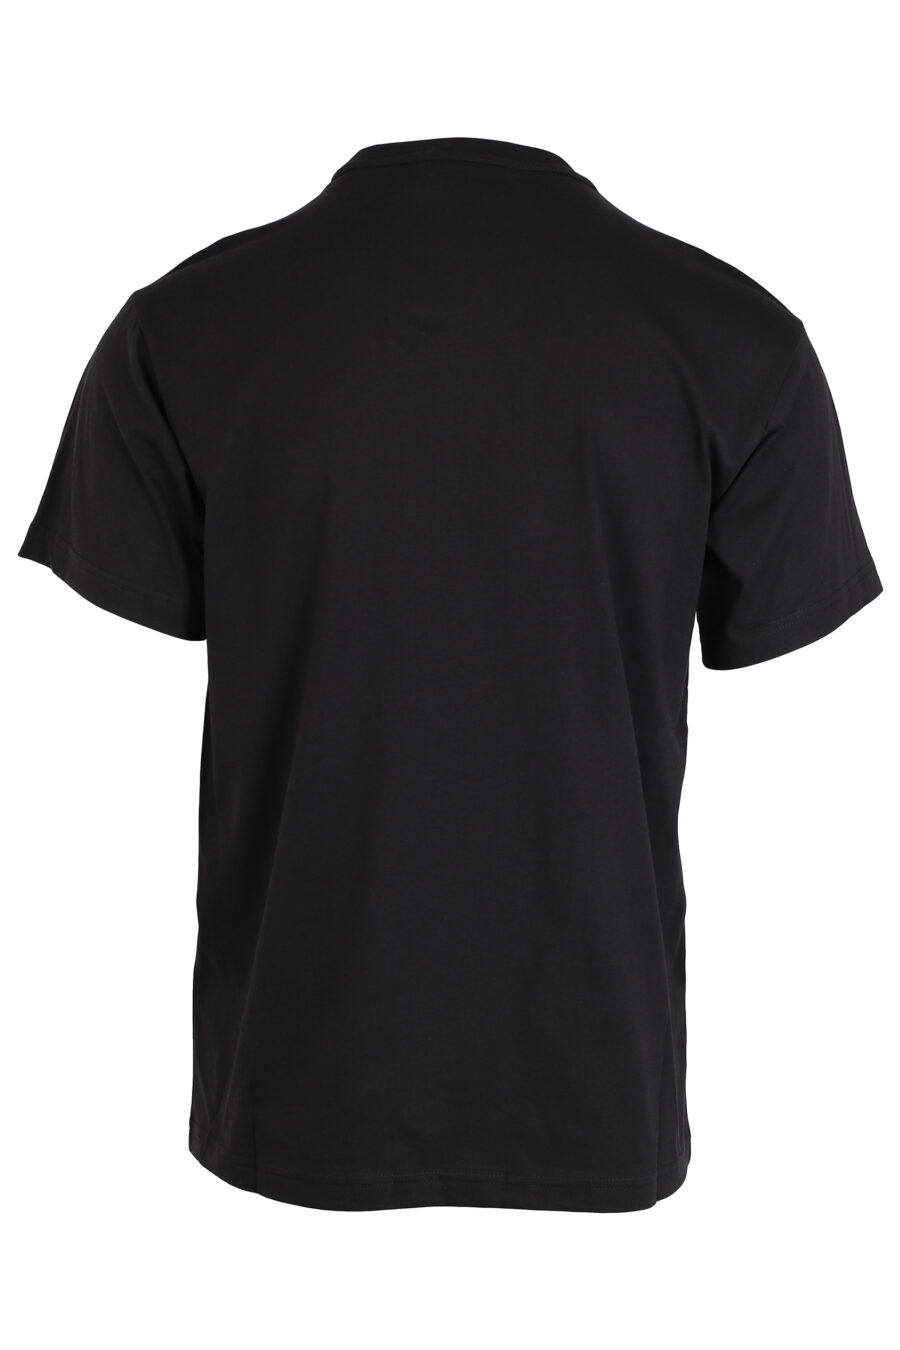 Camiseta negra con logo cuadrado centro tornasol verde - IMG 3988